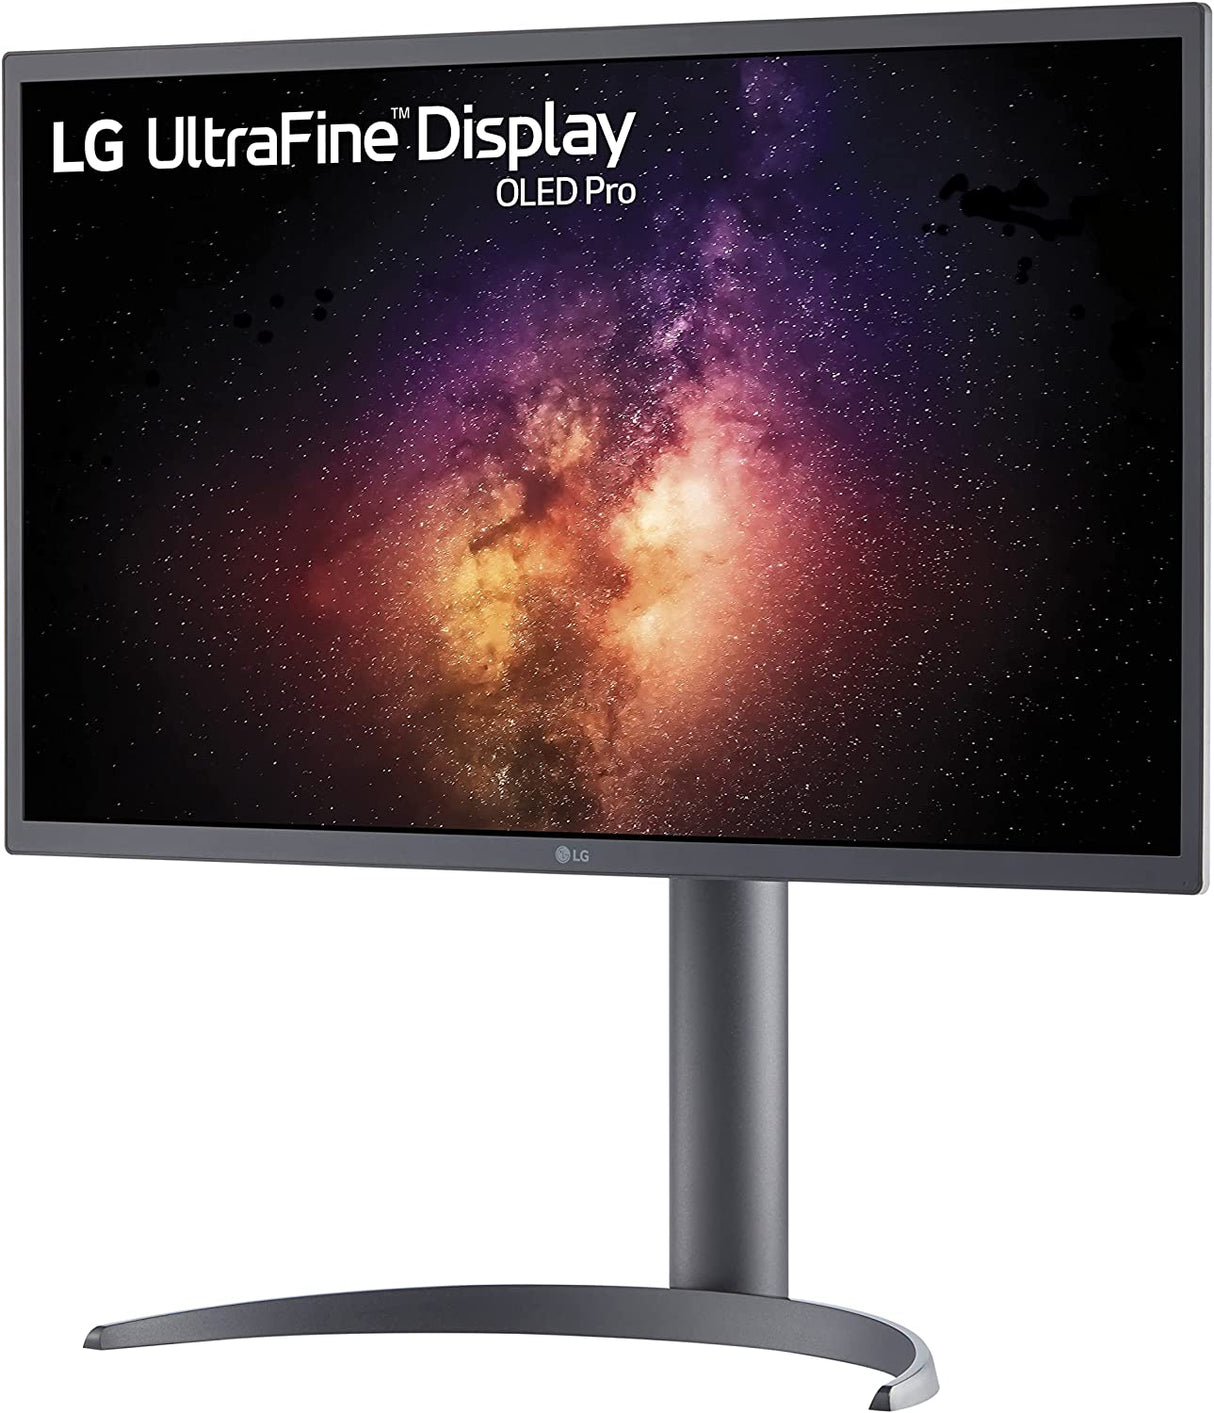 LG 27EP950-B 27” Ultrafine UHD (3840 x 2160) OLED Pro Display with Adobe RBG 99% / DCI-P3 99%, VESA Display HDR 400 True Black, 1M:1 Contrast Ratio and Tilt/Height/Pivot Adjustable Stand - Black